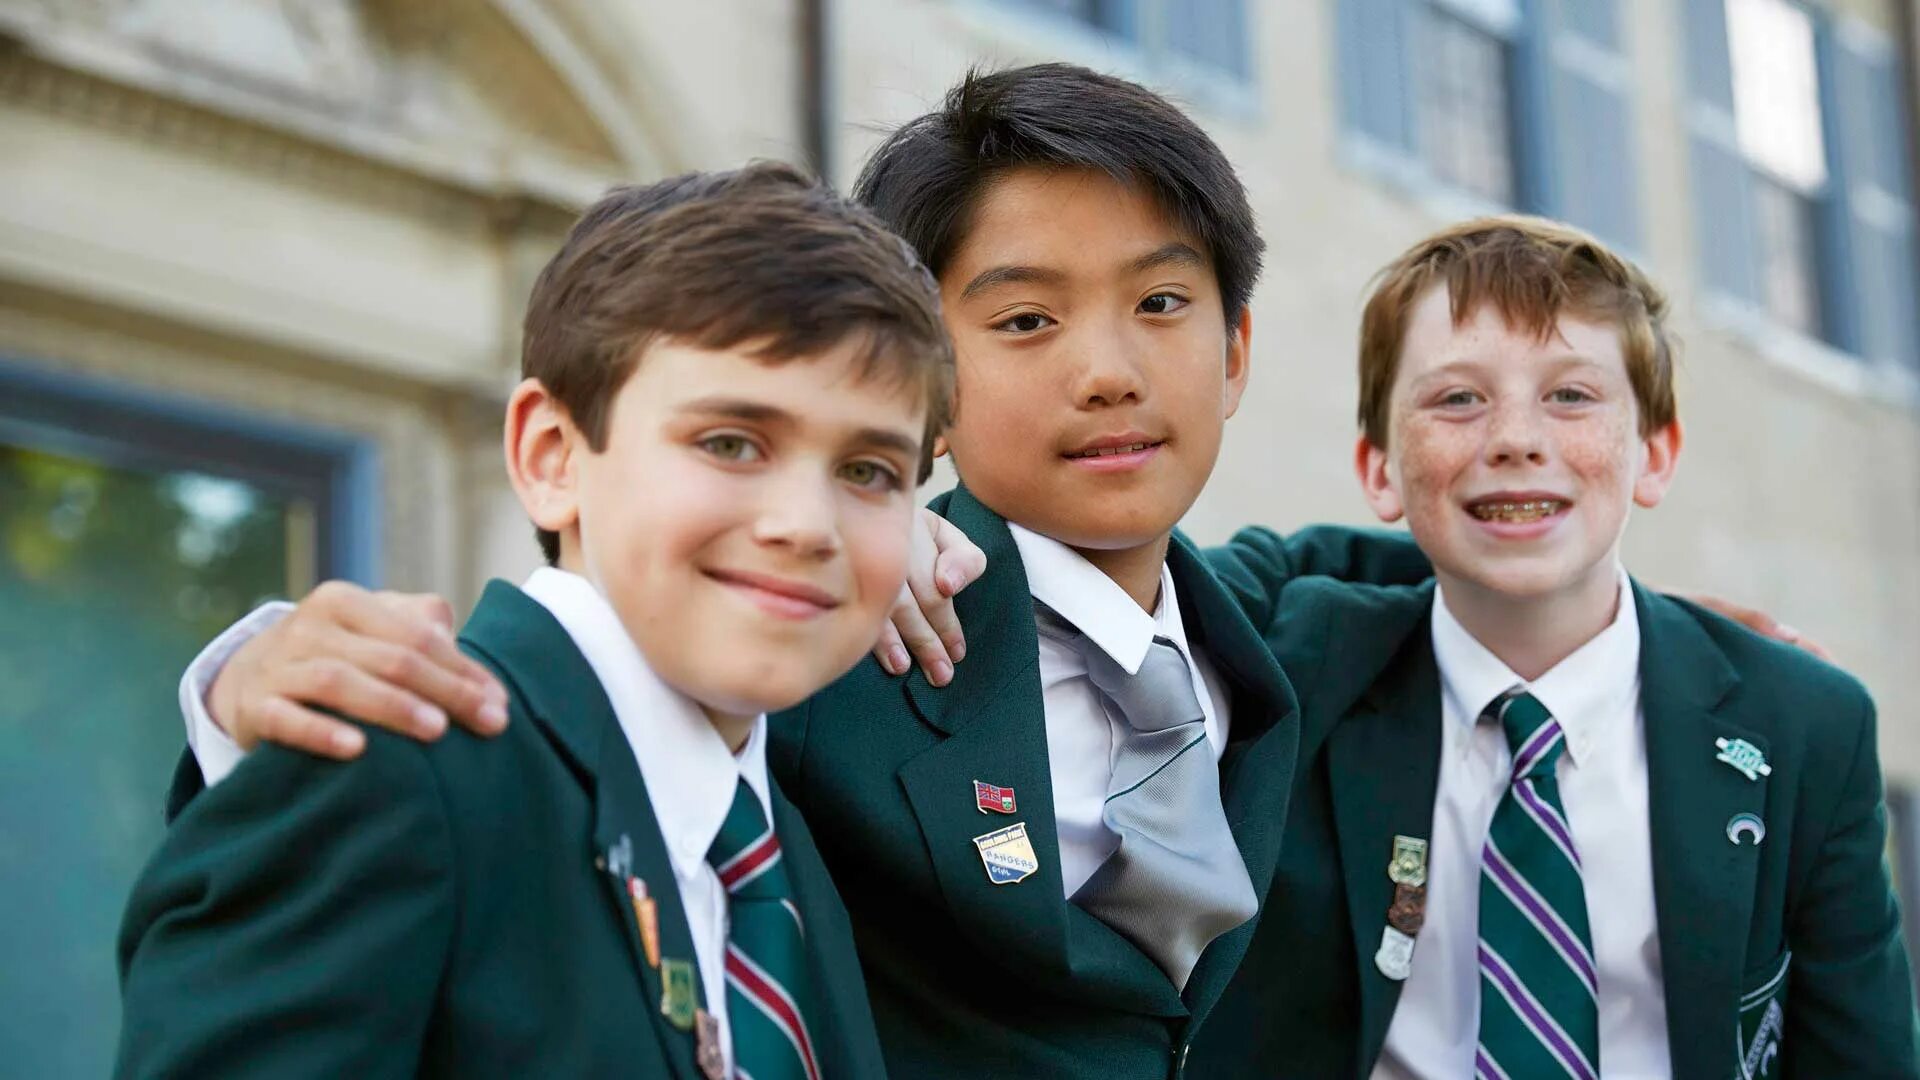 British School boy. 2 Mexican School boys. School boys England. Boys private School.